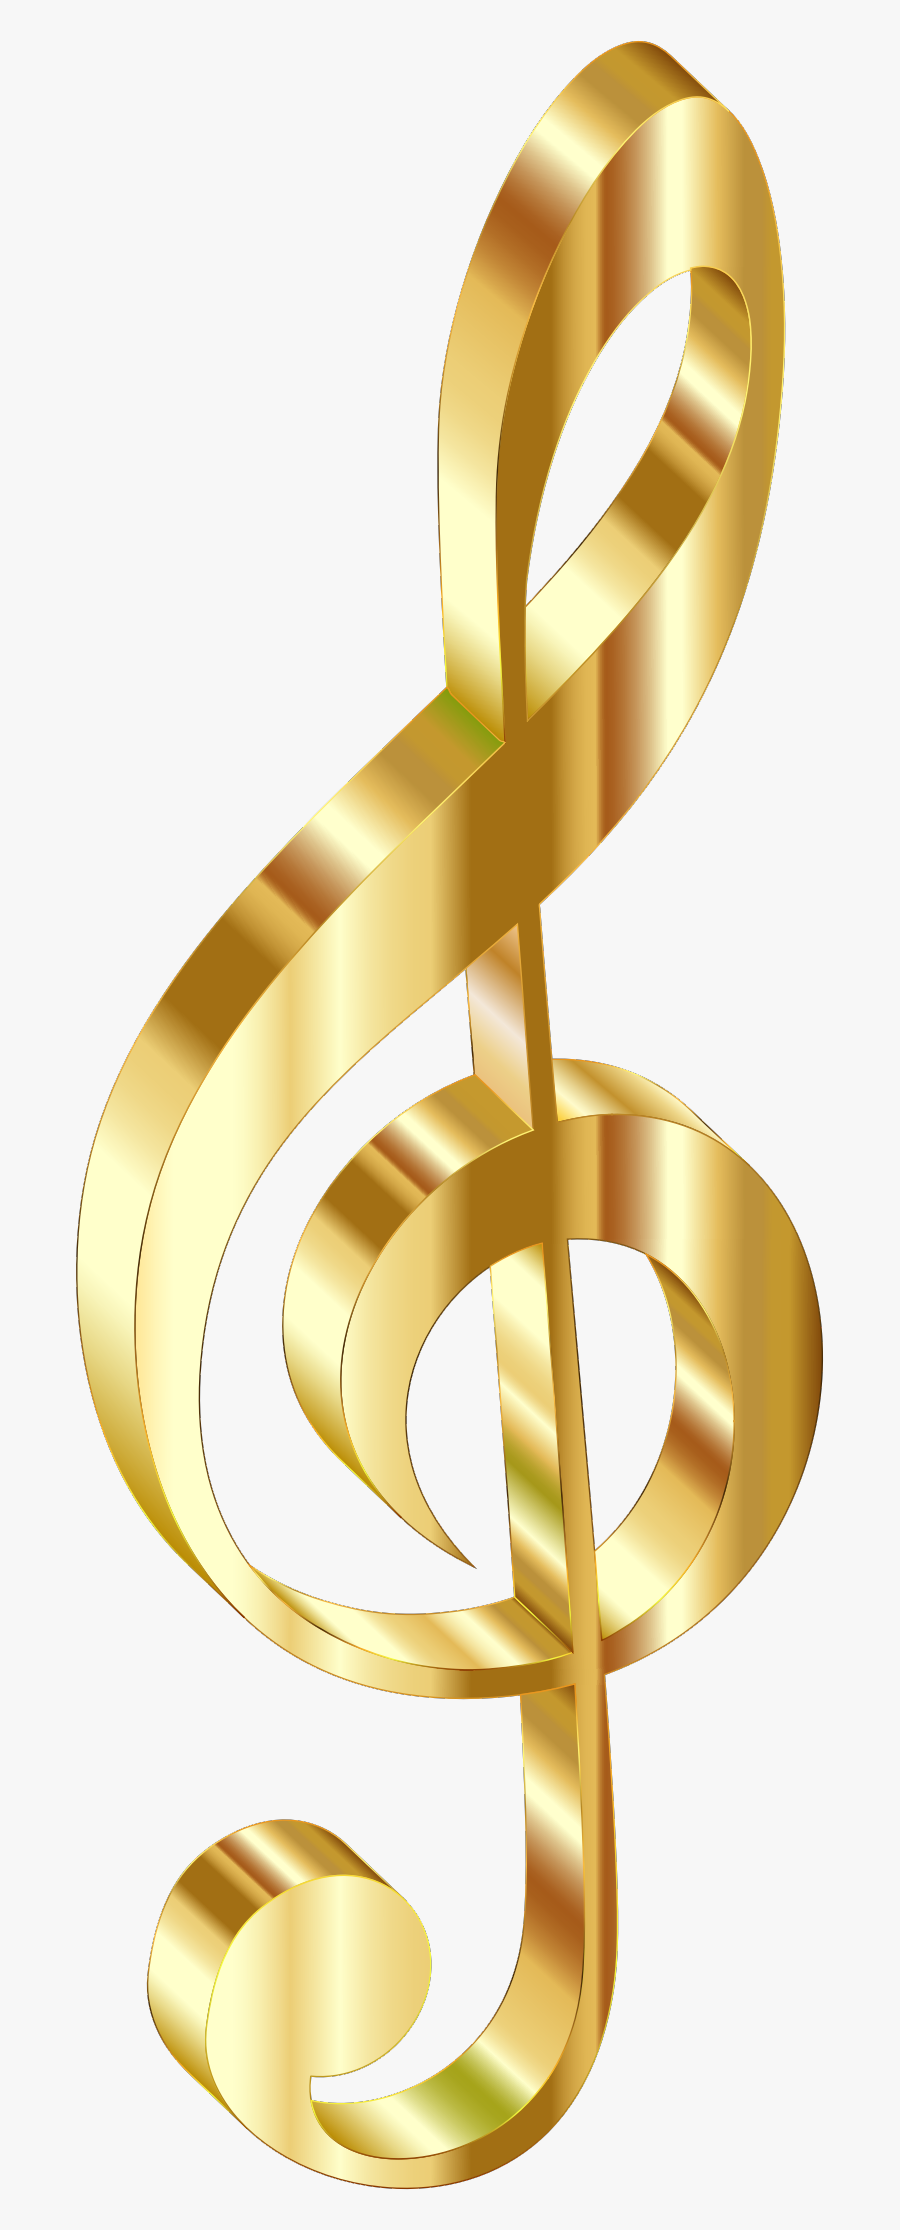 Gold D No Background - Gold Music Note Transparent Background, Transparent Clipart